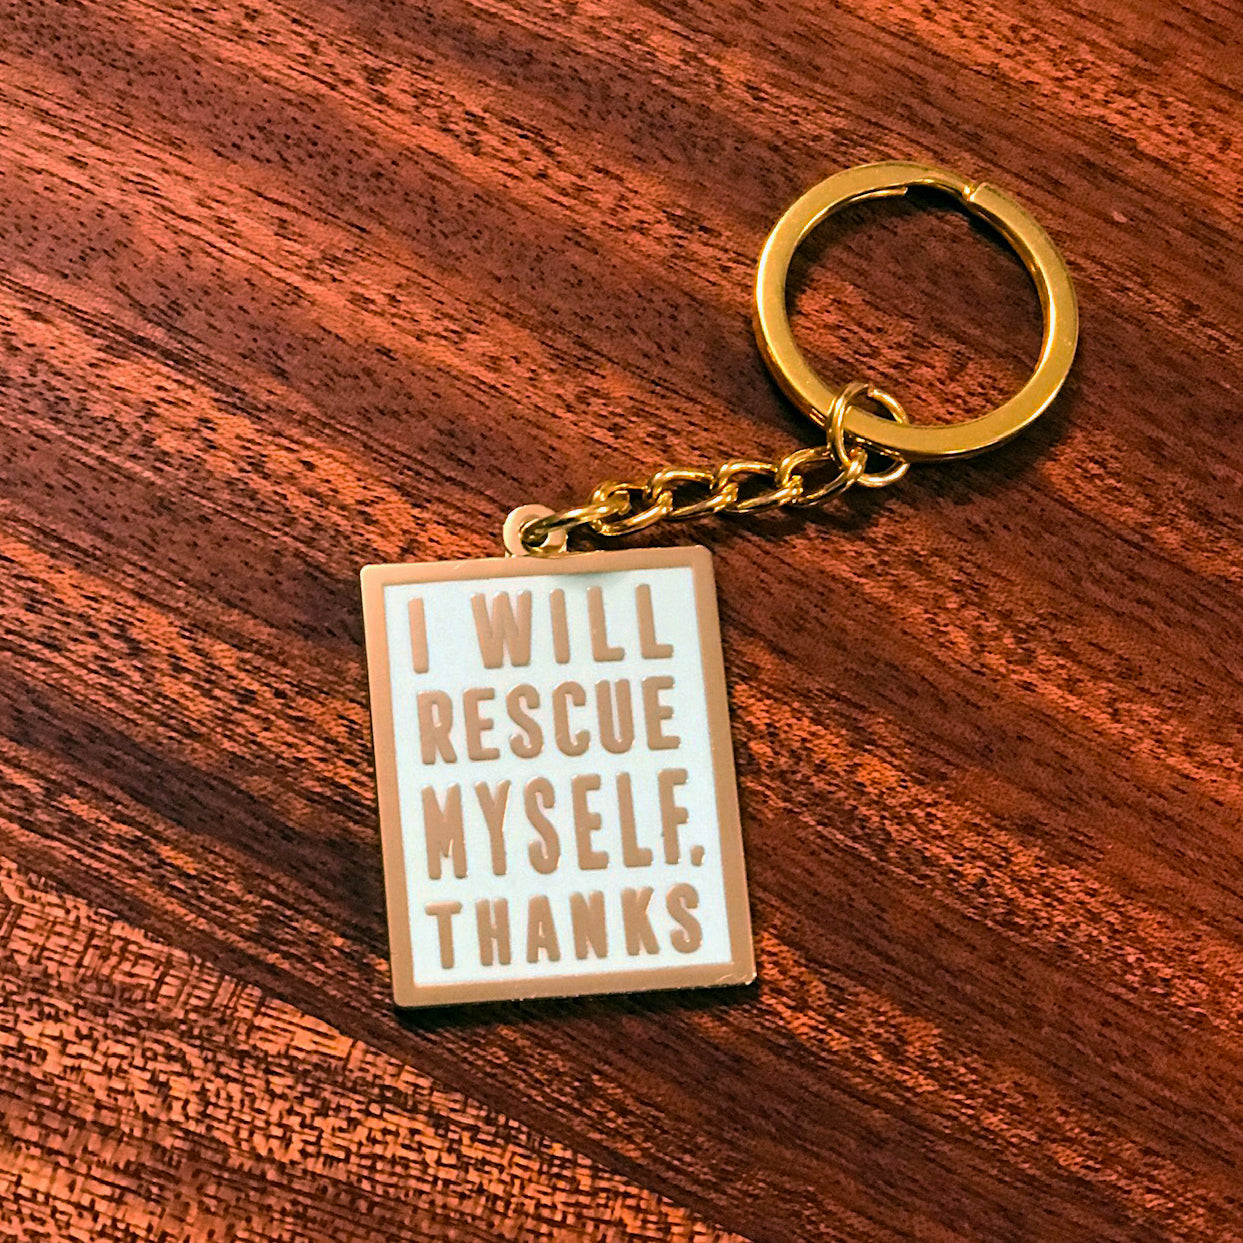 Keychain: I Will Rescue Myself, Thanks - Mint